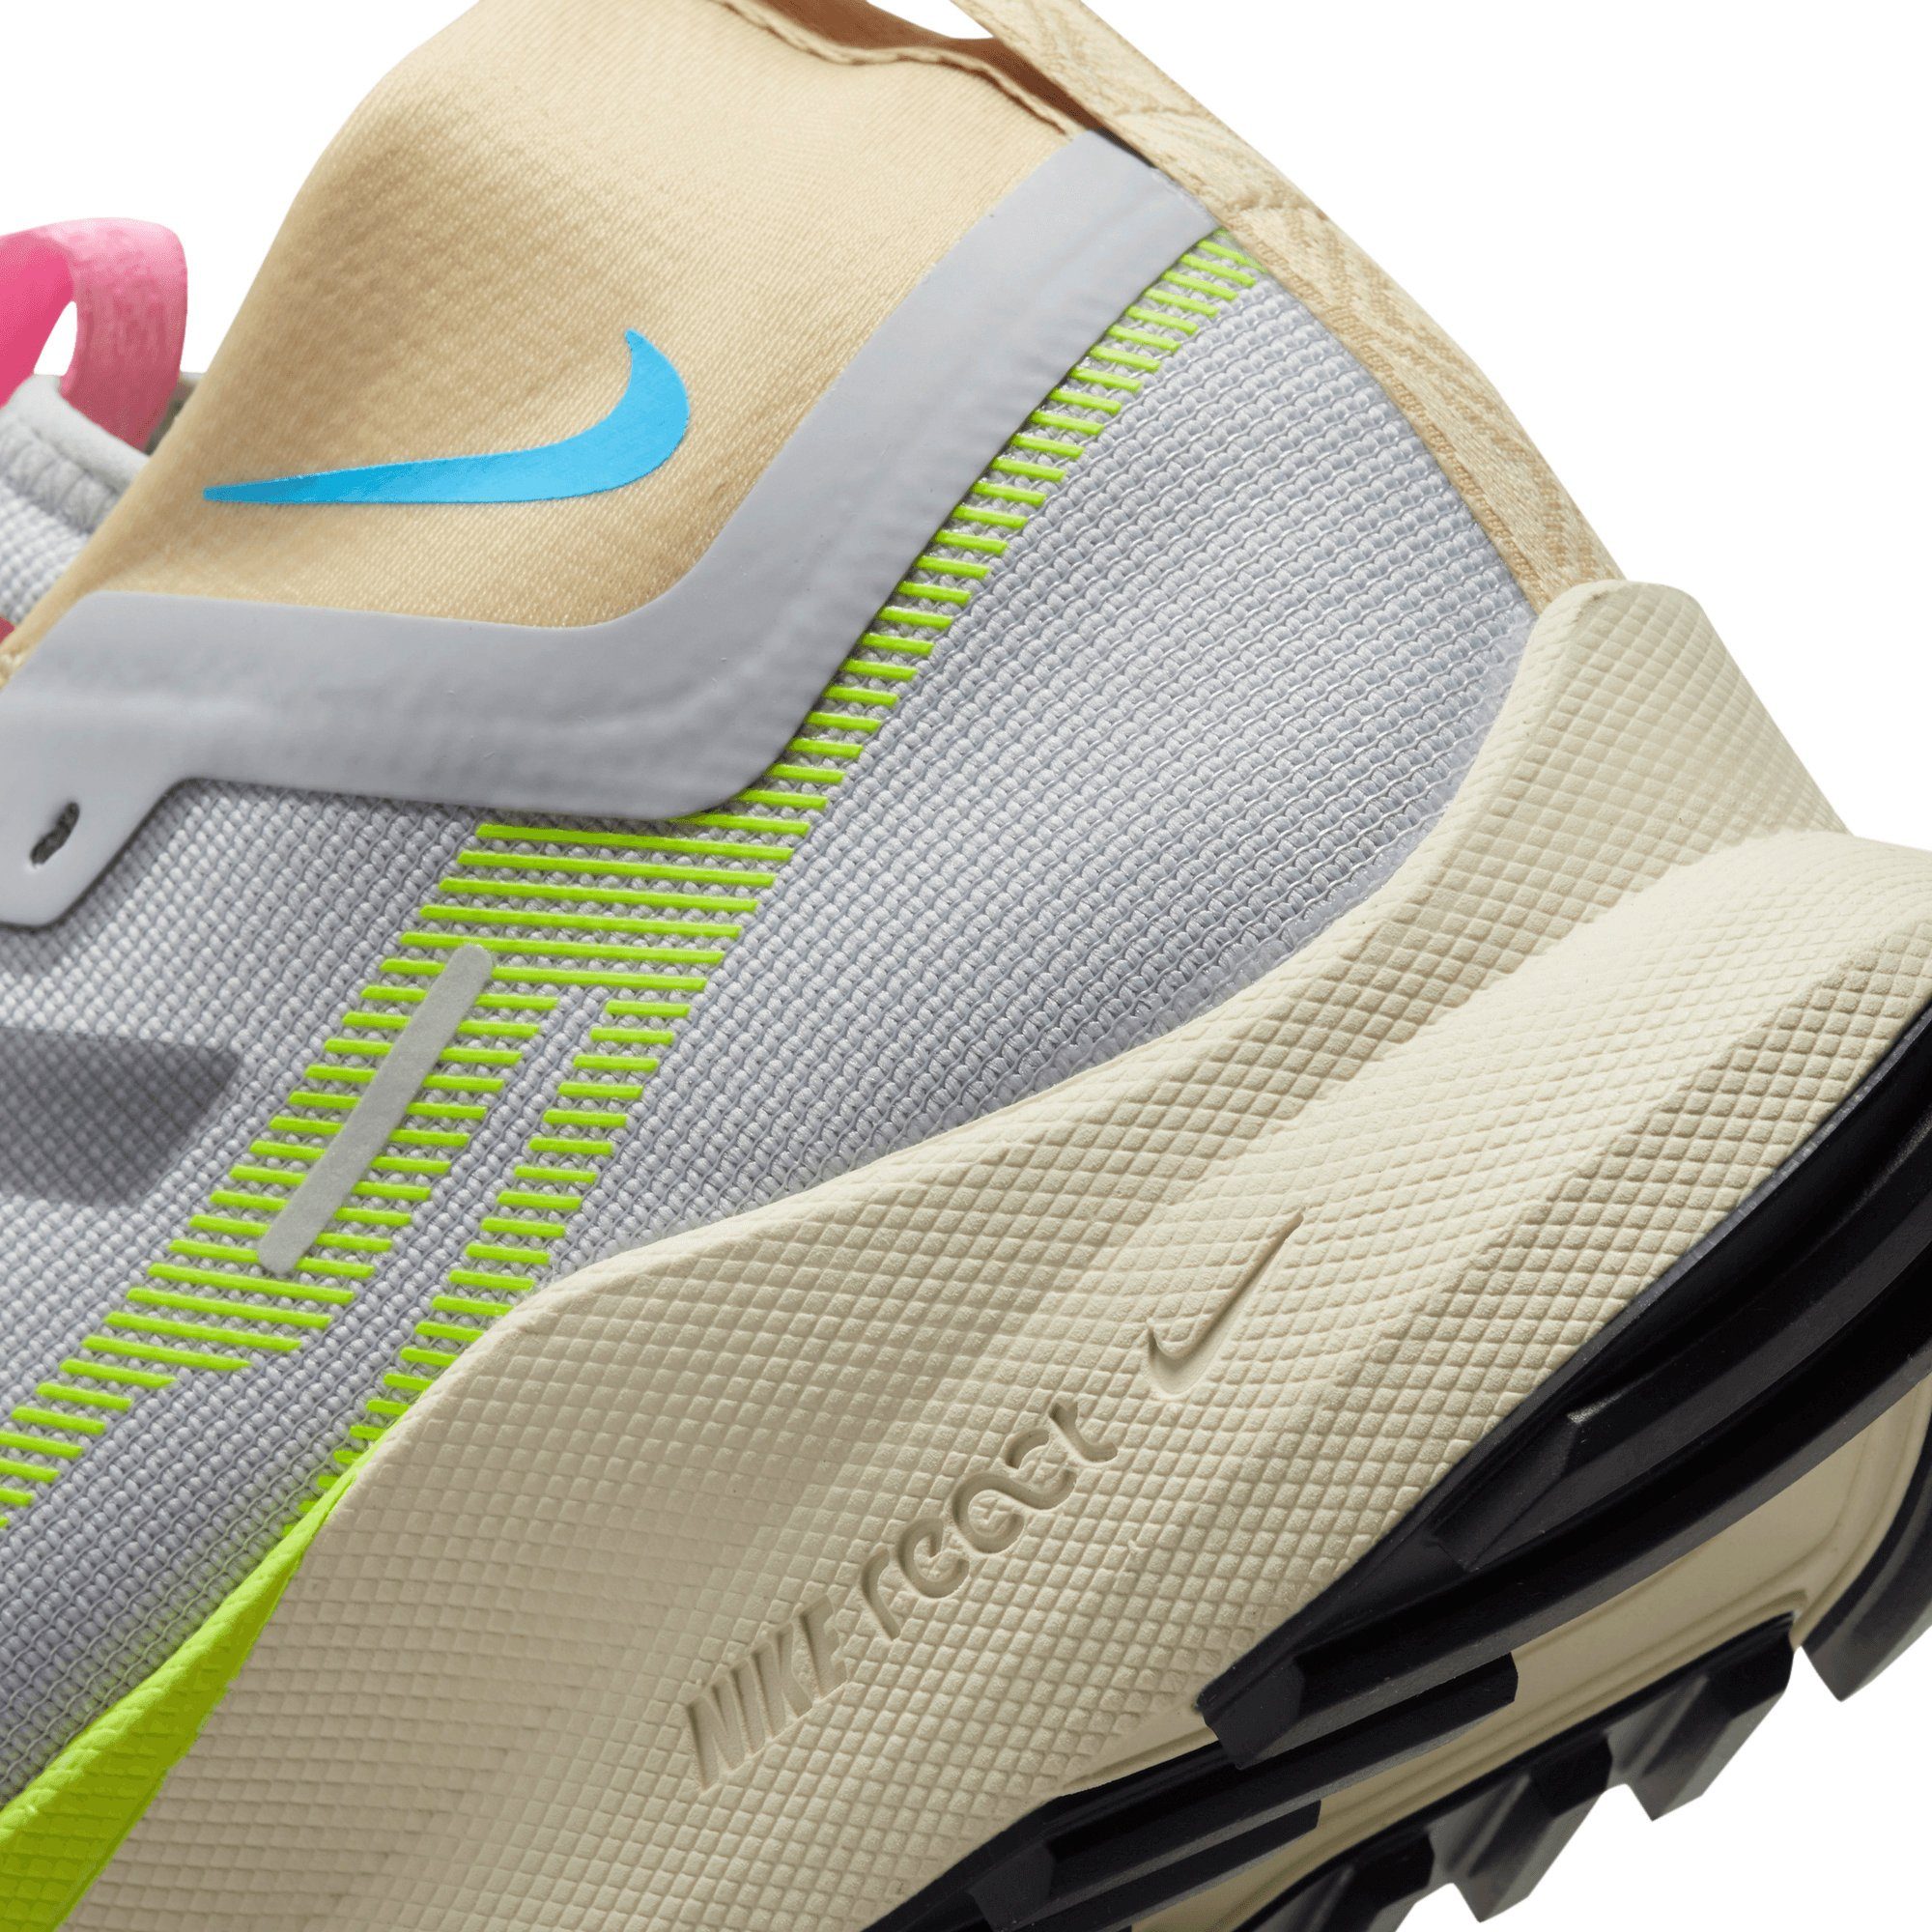 Nike Laufschuh 4 WATERPROO GORE-TEX WOLF-GREY-VOLT-STADIUM-GREEN-BALTIC-BLUE wasserdicht TRAIL PEGASUS